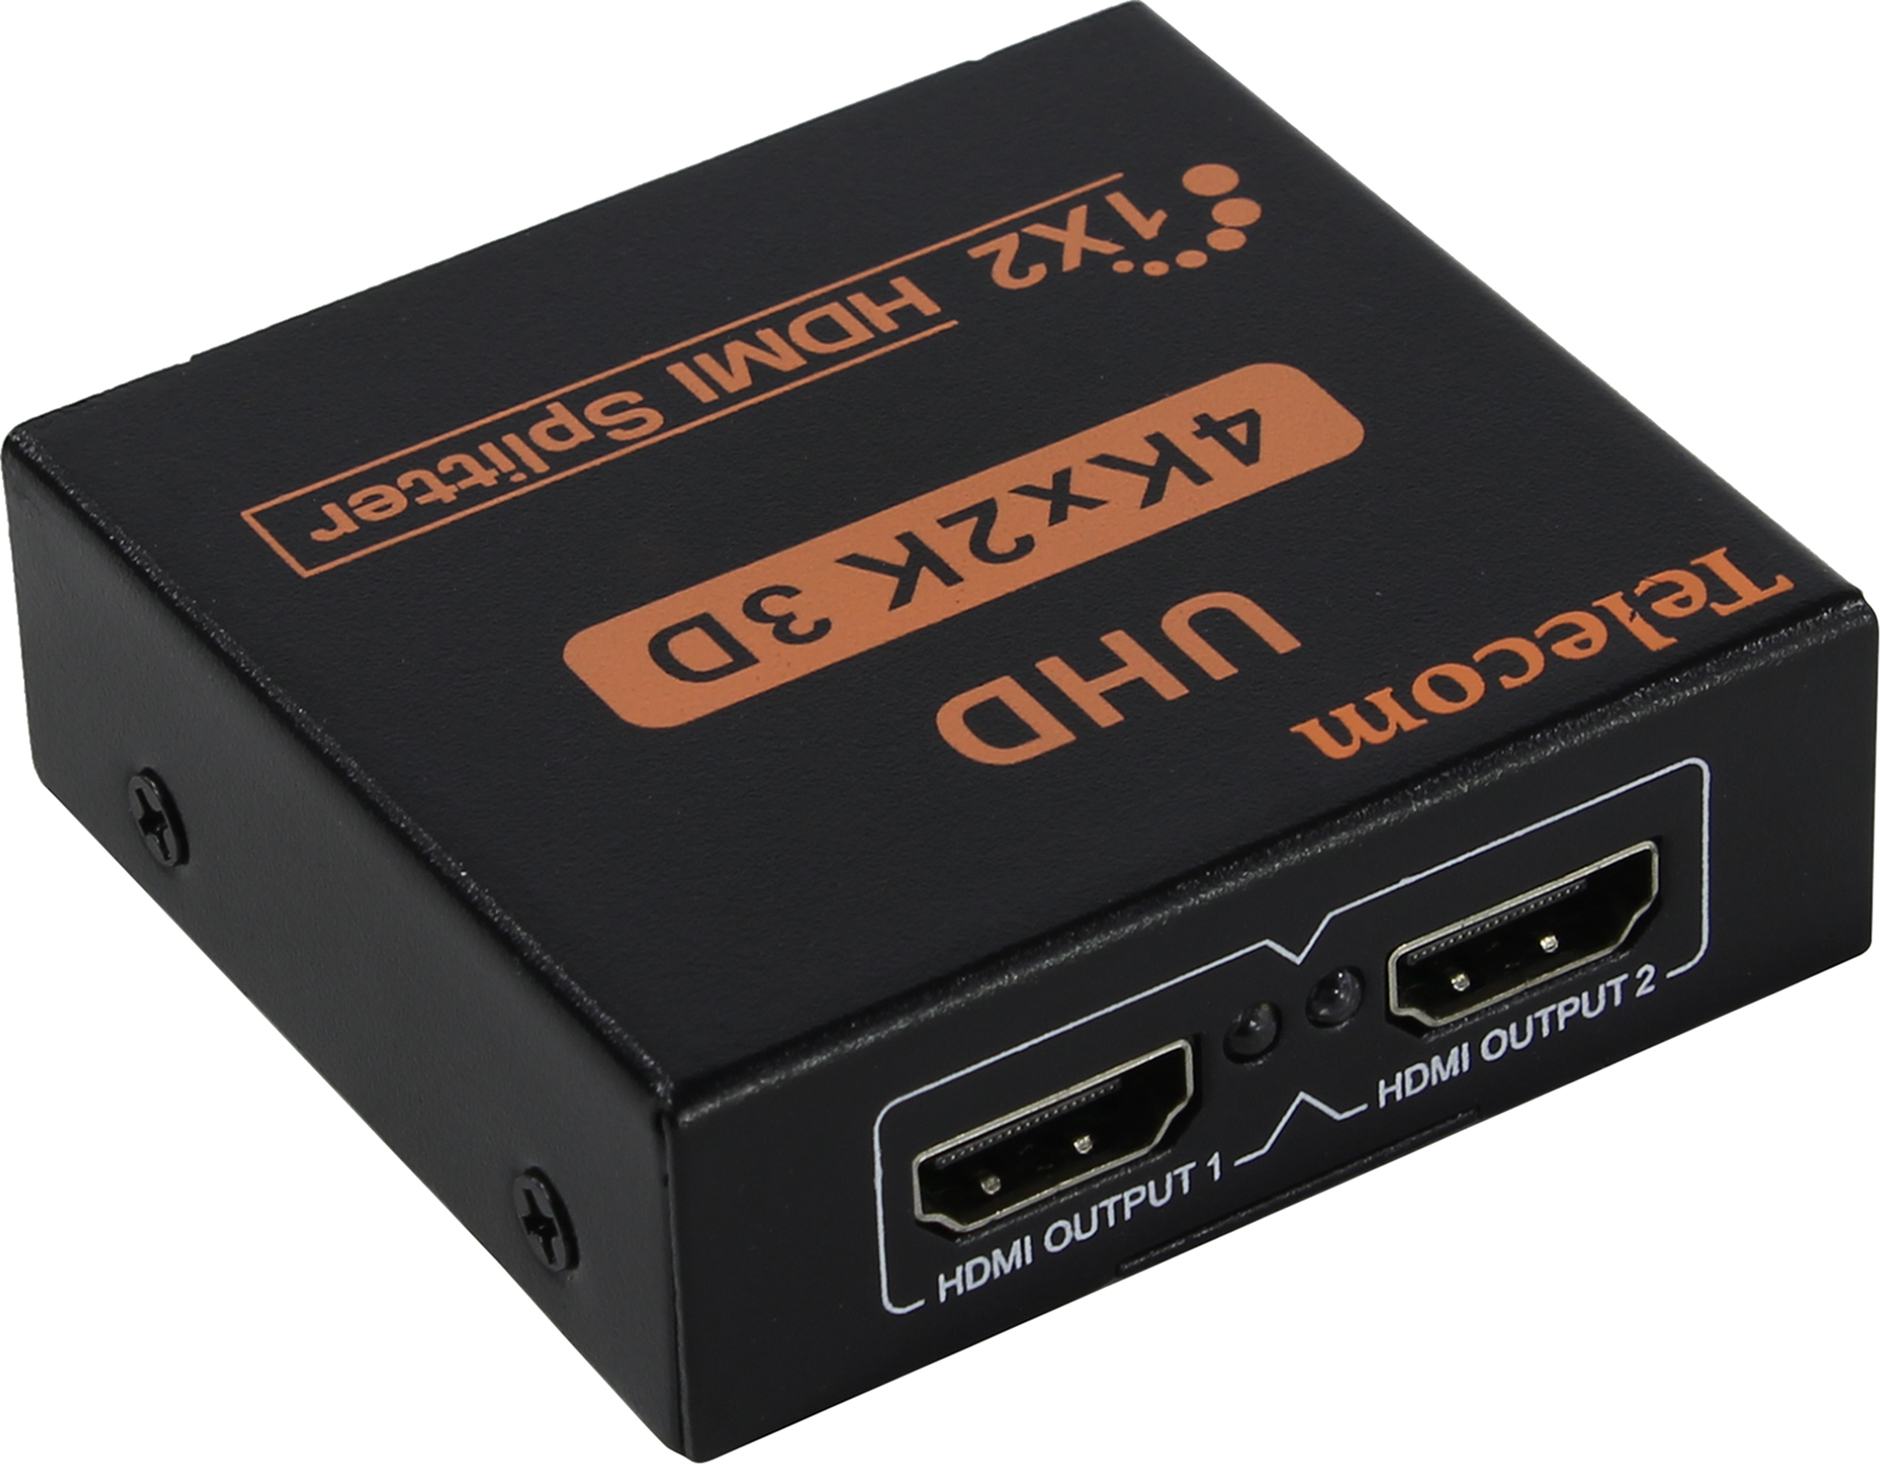 Переключатель/разветвитель HDMI Telecom TTS7000, 1xHDMI-2xHDMI, 3840x2160 (TTS7000)